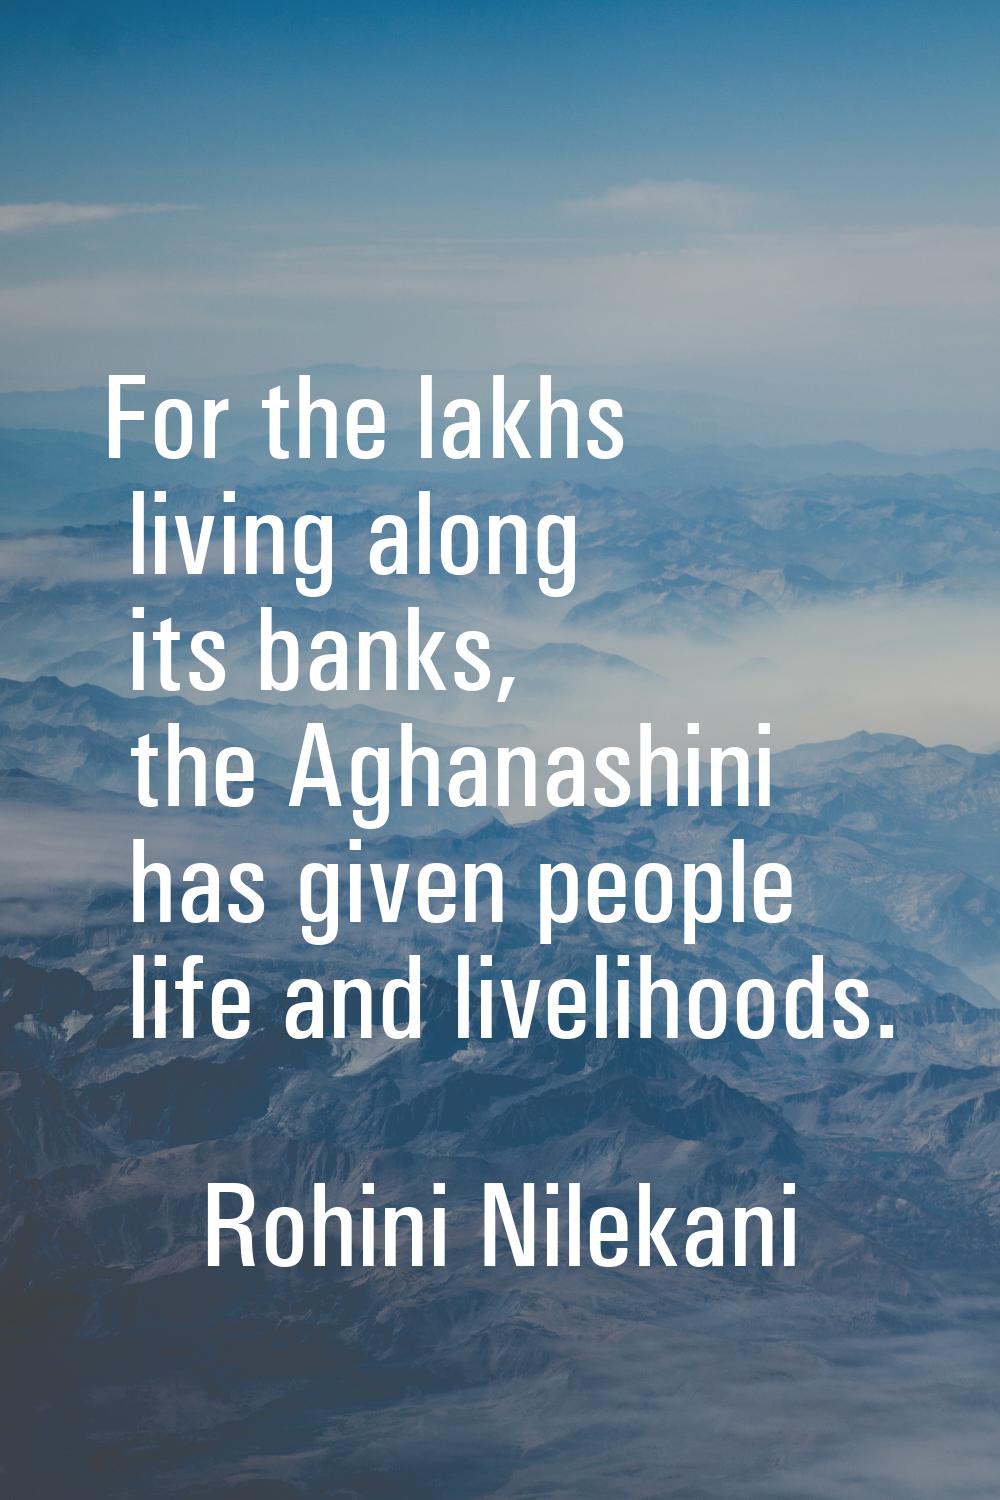 For the lakhs living along its banks, the Aghanashini has given people life and livelihoods.